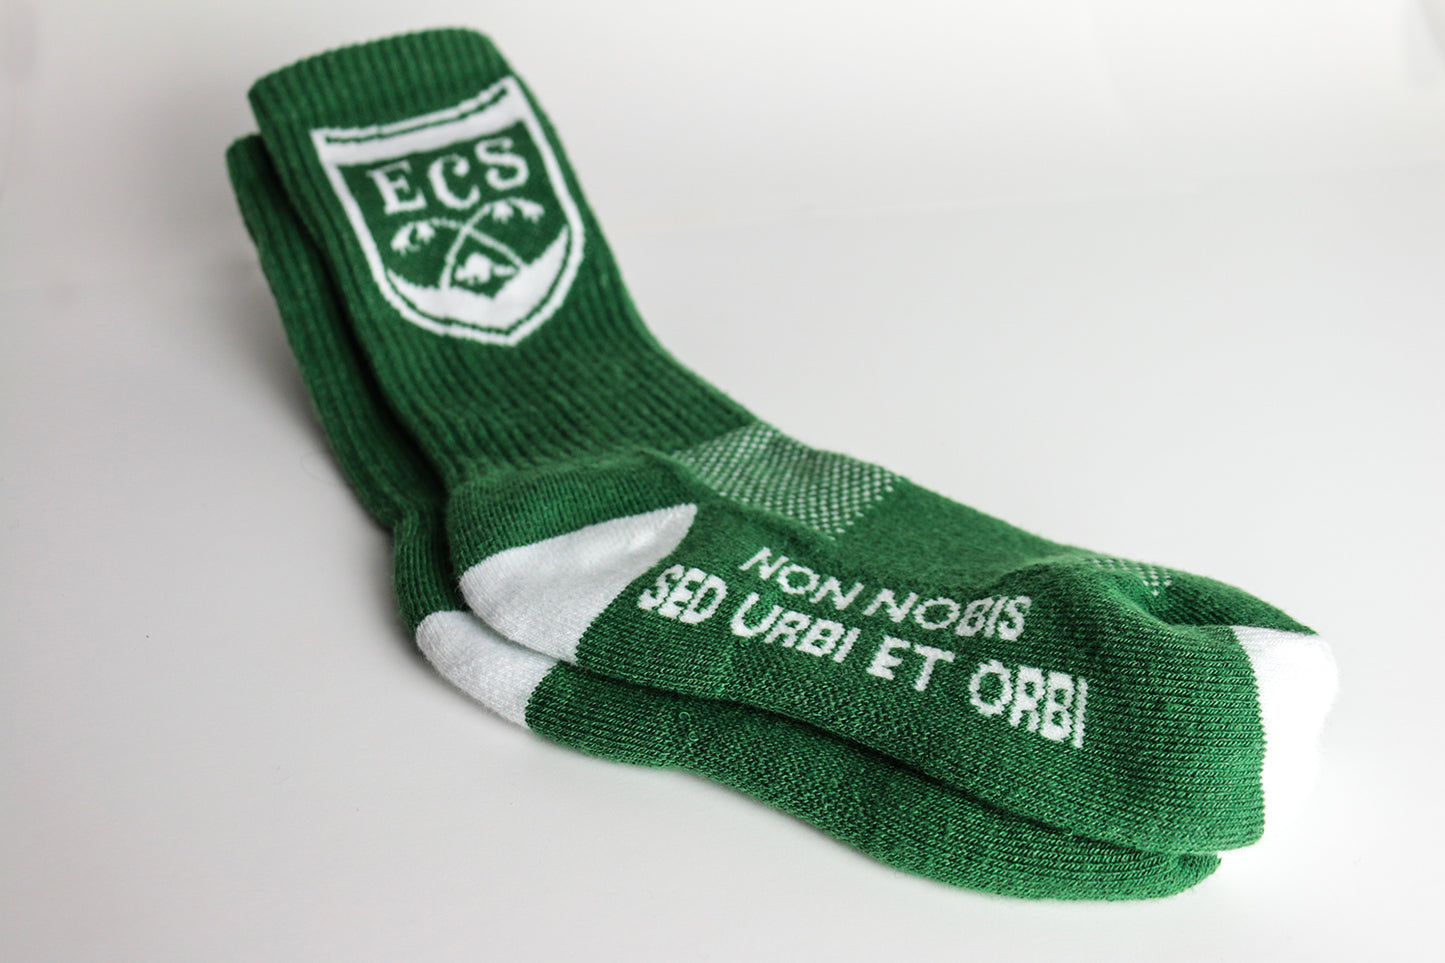 ECS 'Non Nobis' Athletic Socks